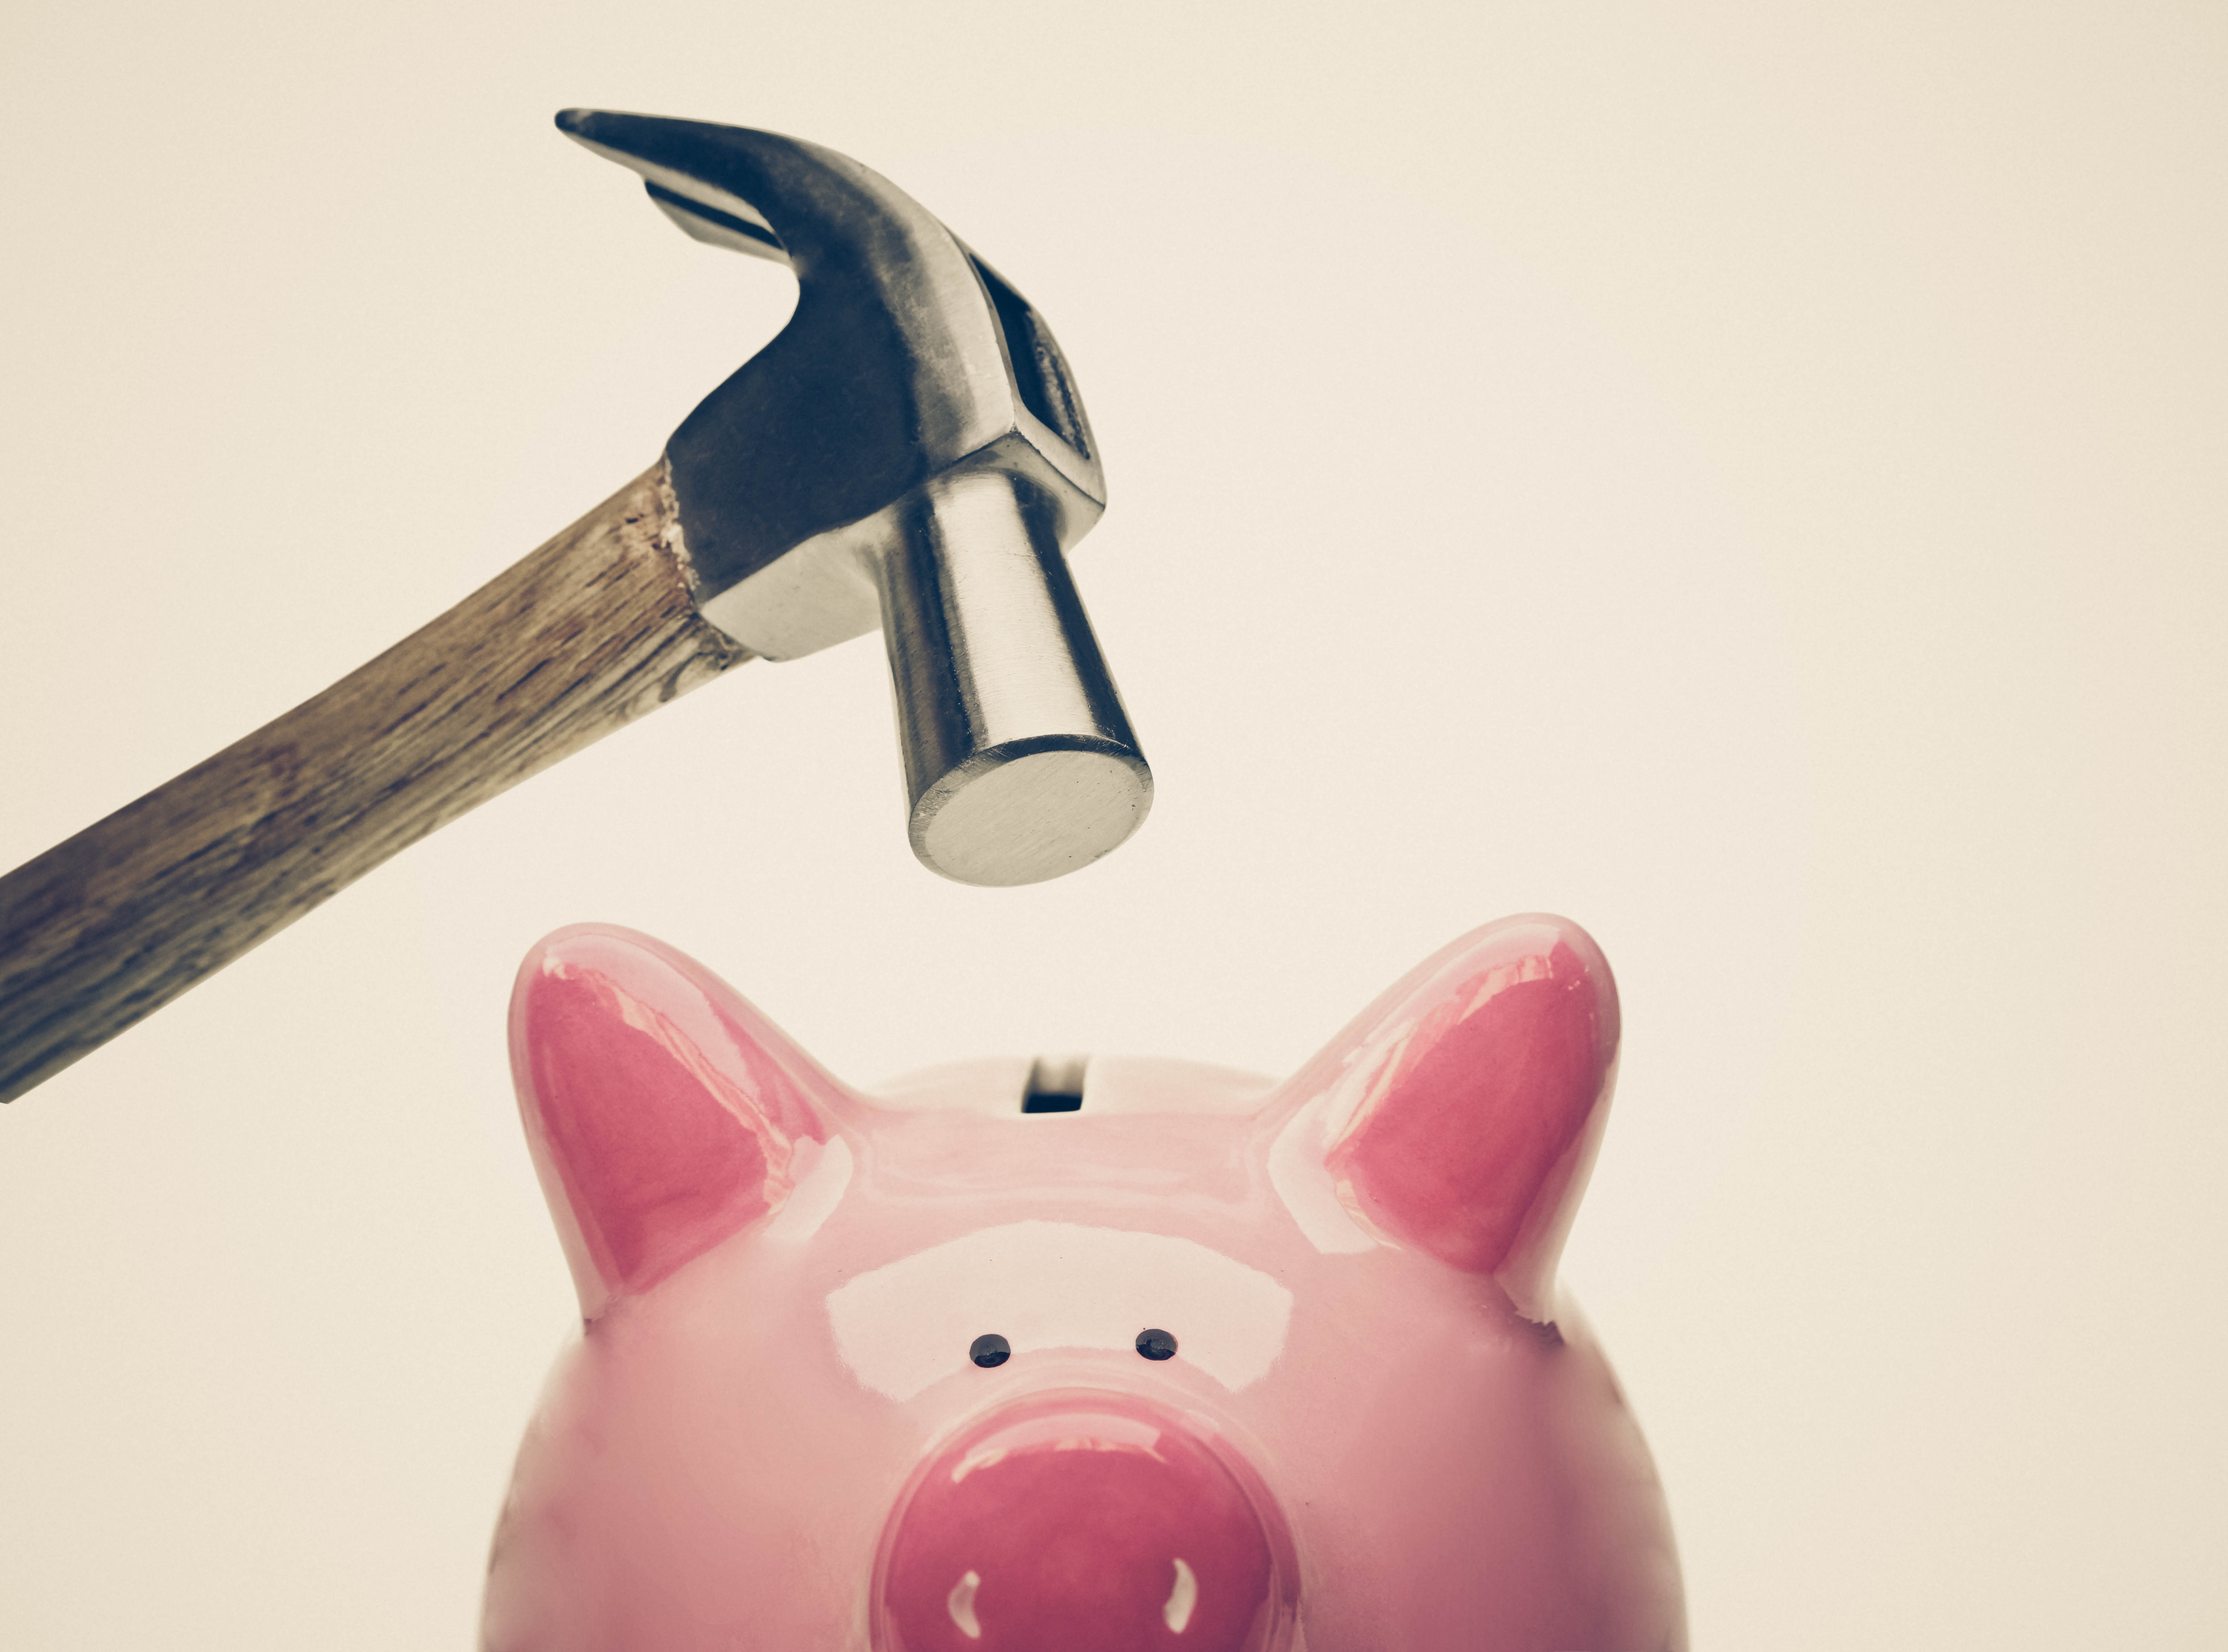 hammer above piggy bank compliance issues